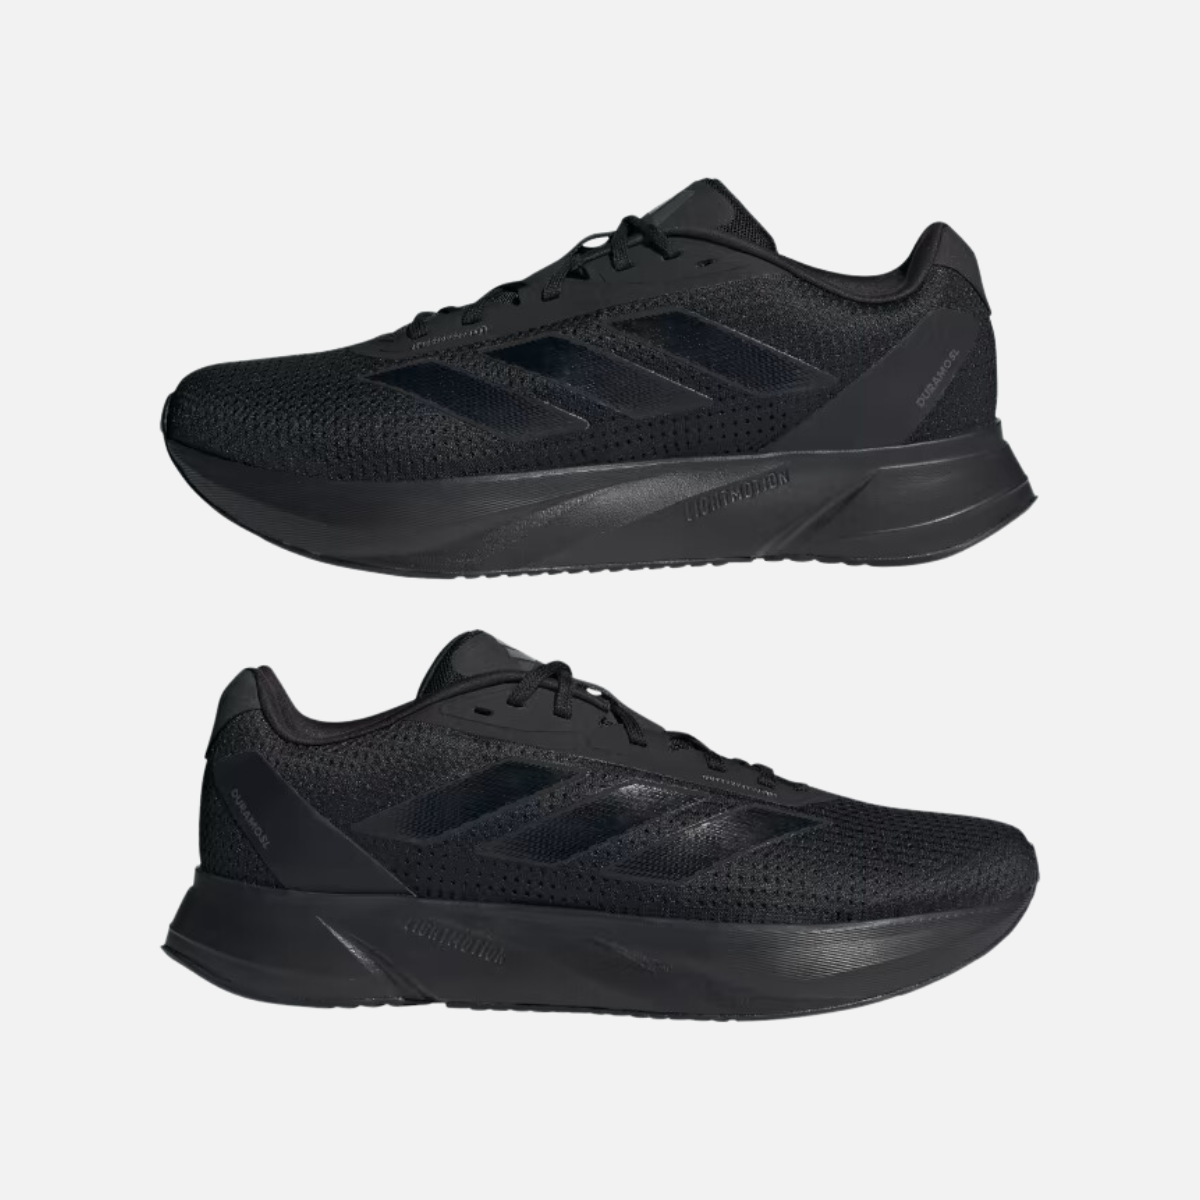 Adidas Duramo SL Men's Running Shoes -Core Black/Core Black/Cloud White